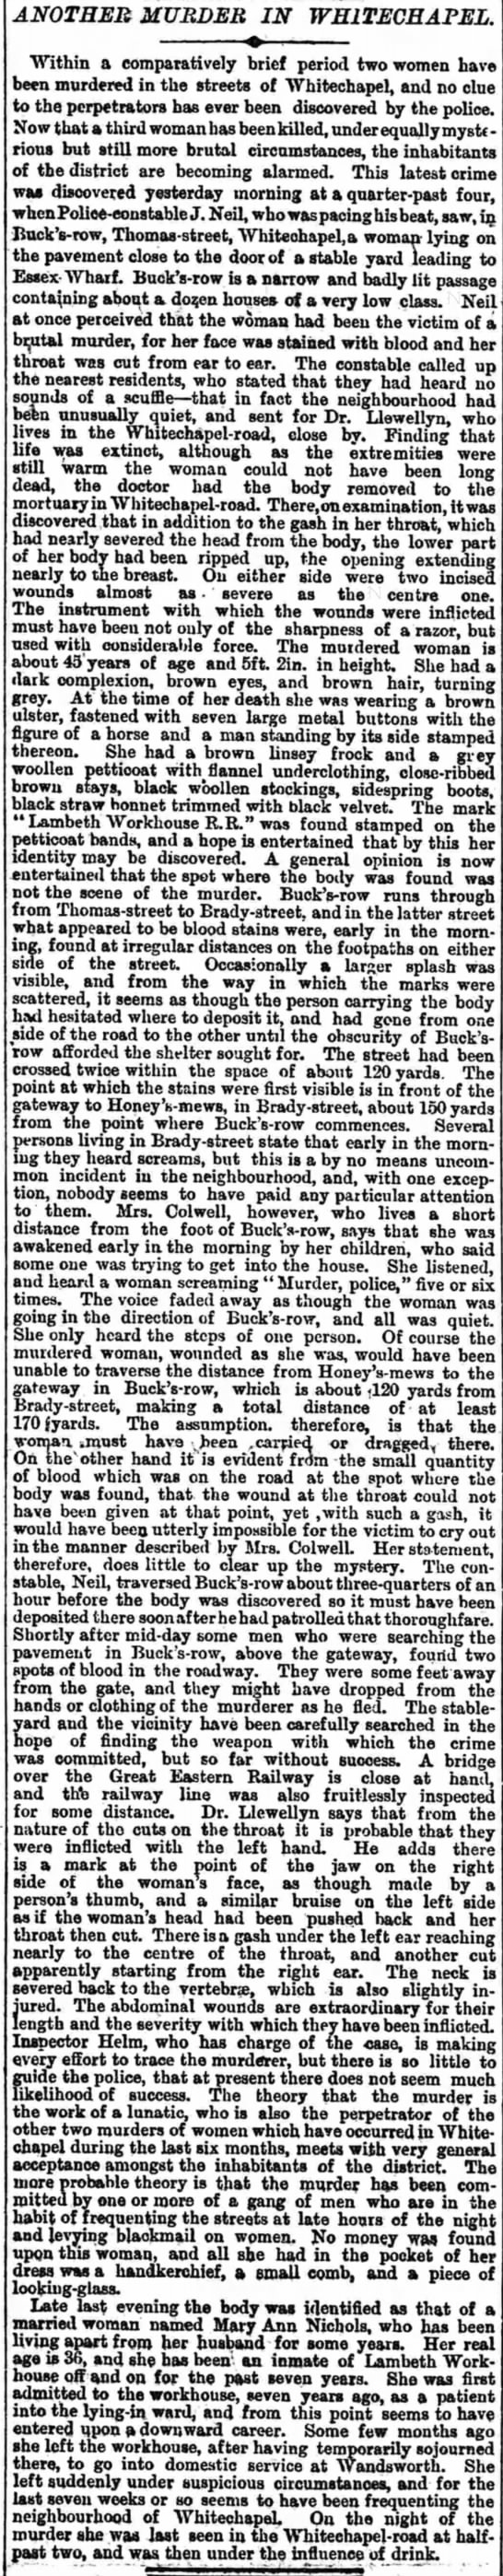 "Another Murder in Whitechapel" - 